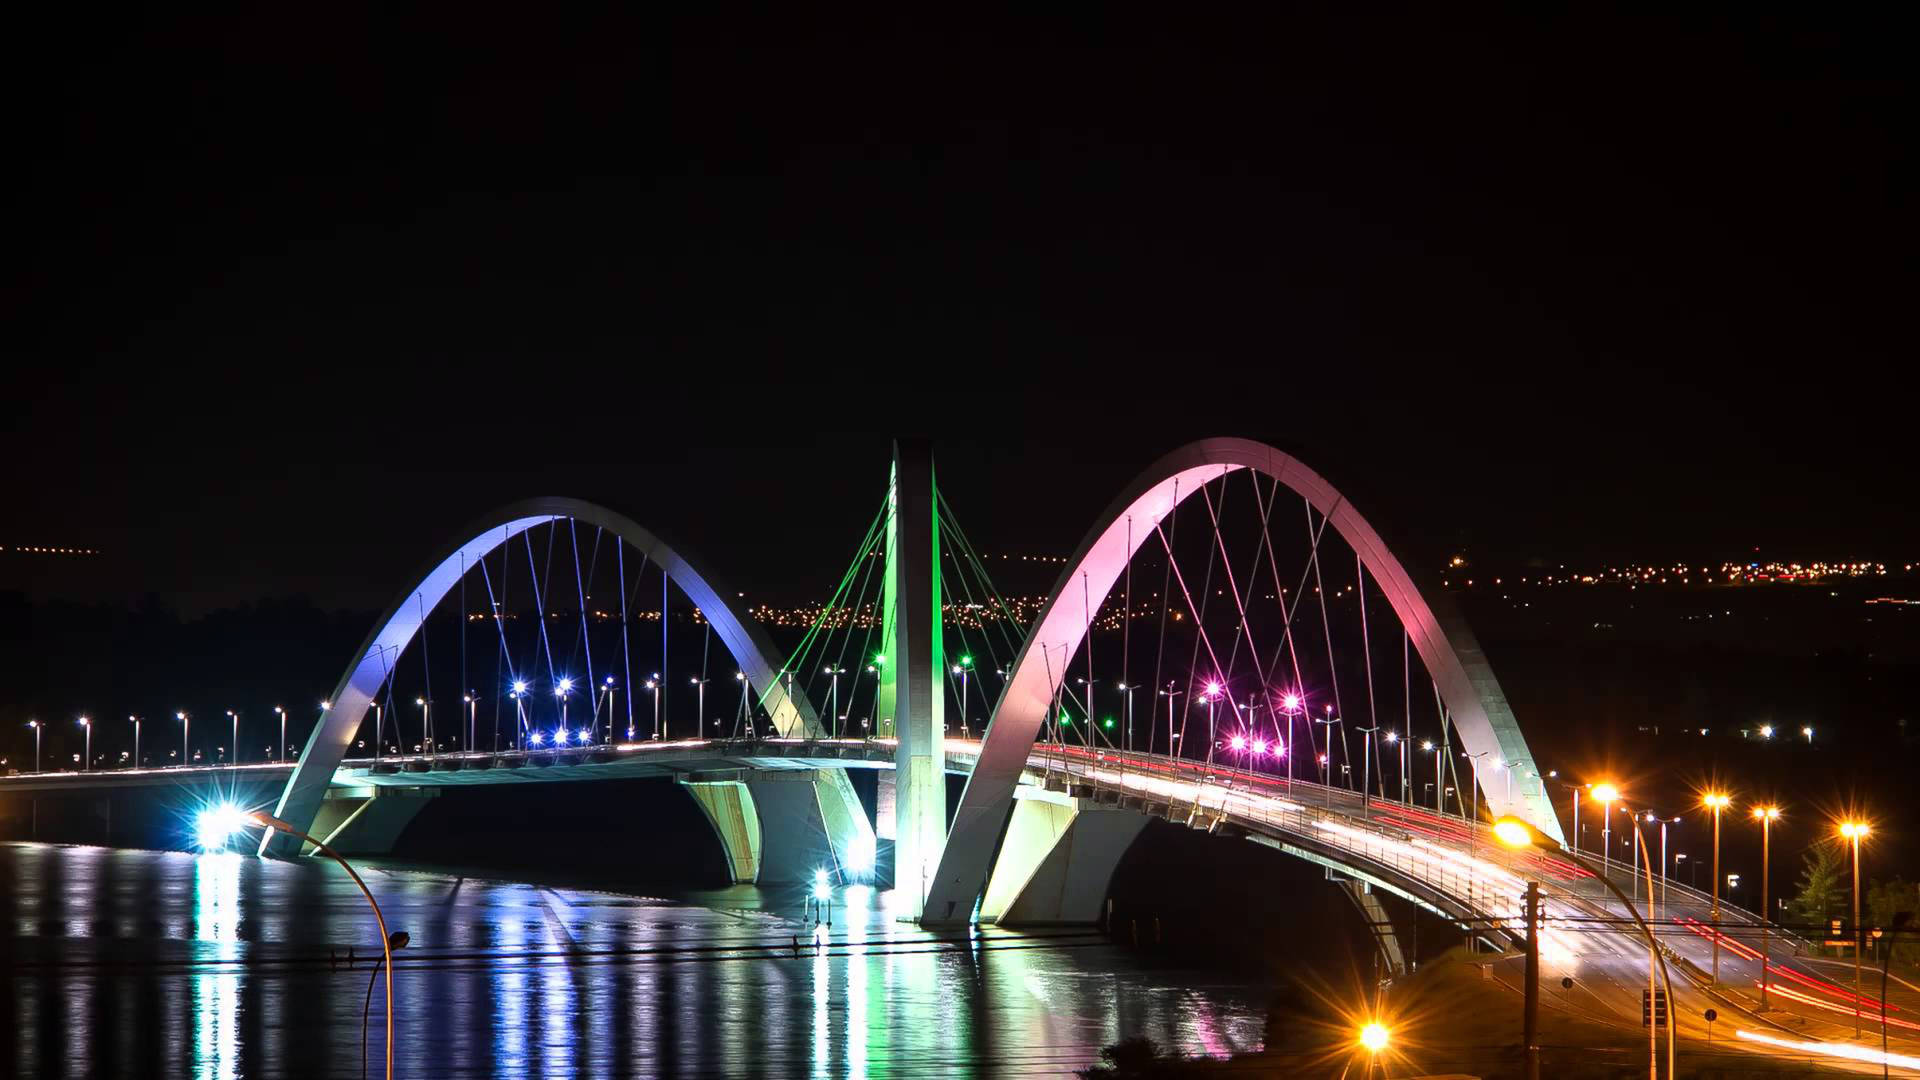 Scenic View Of The Iconic Juscelino Kubitschek Bridge In Brazil